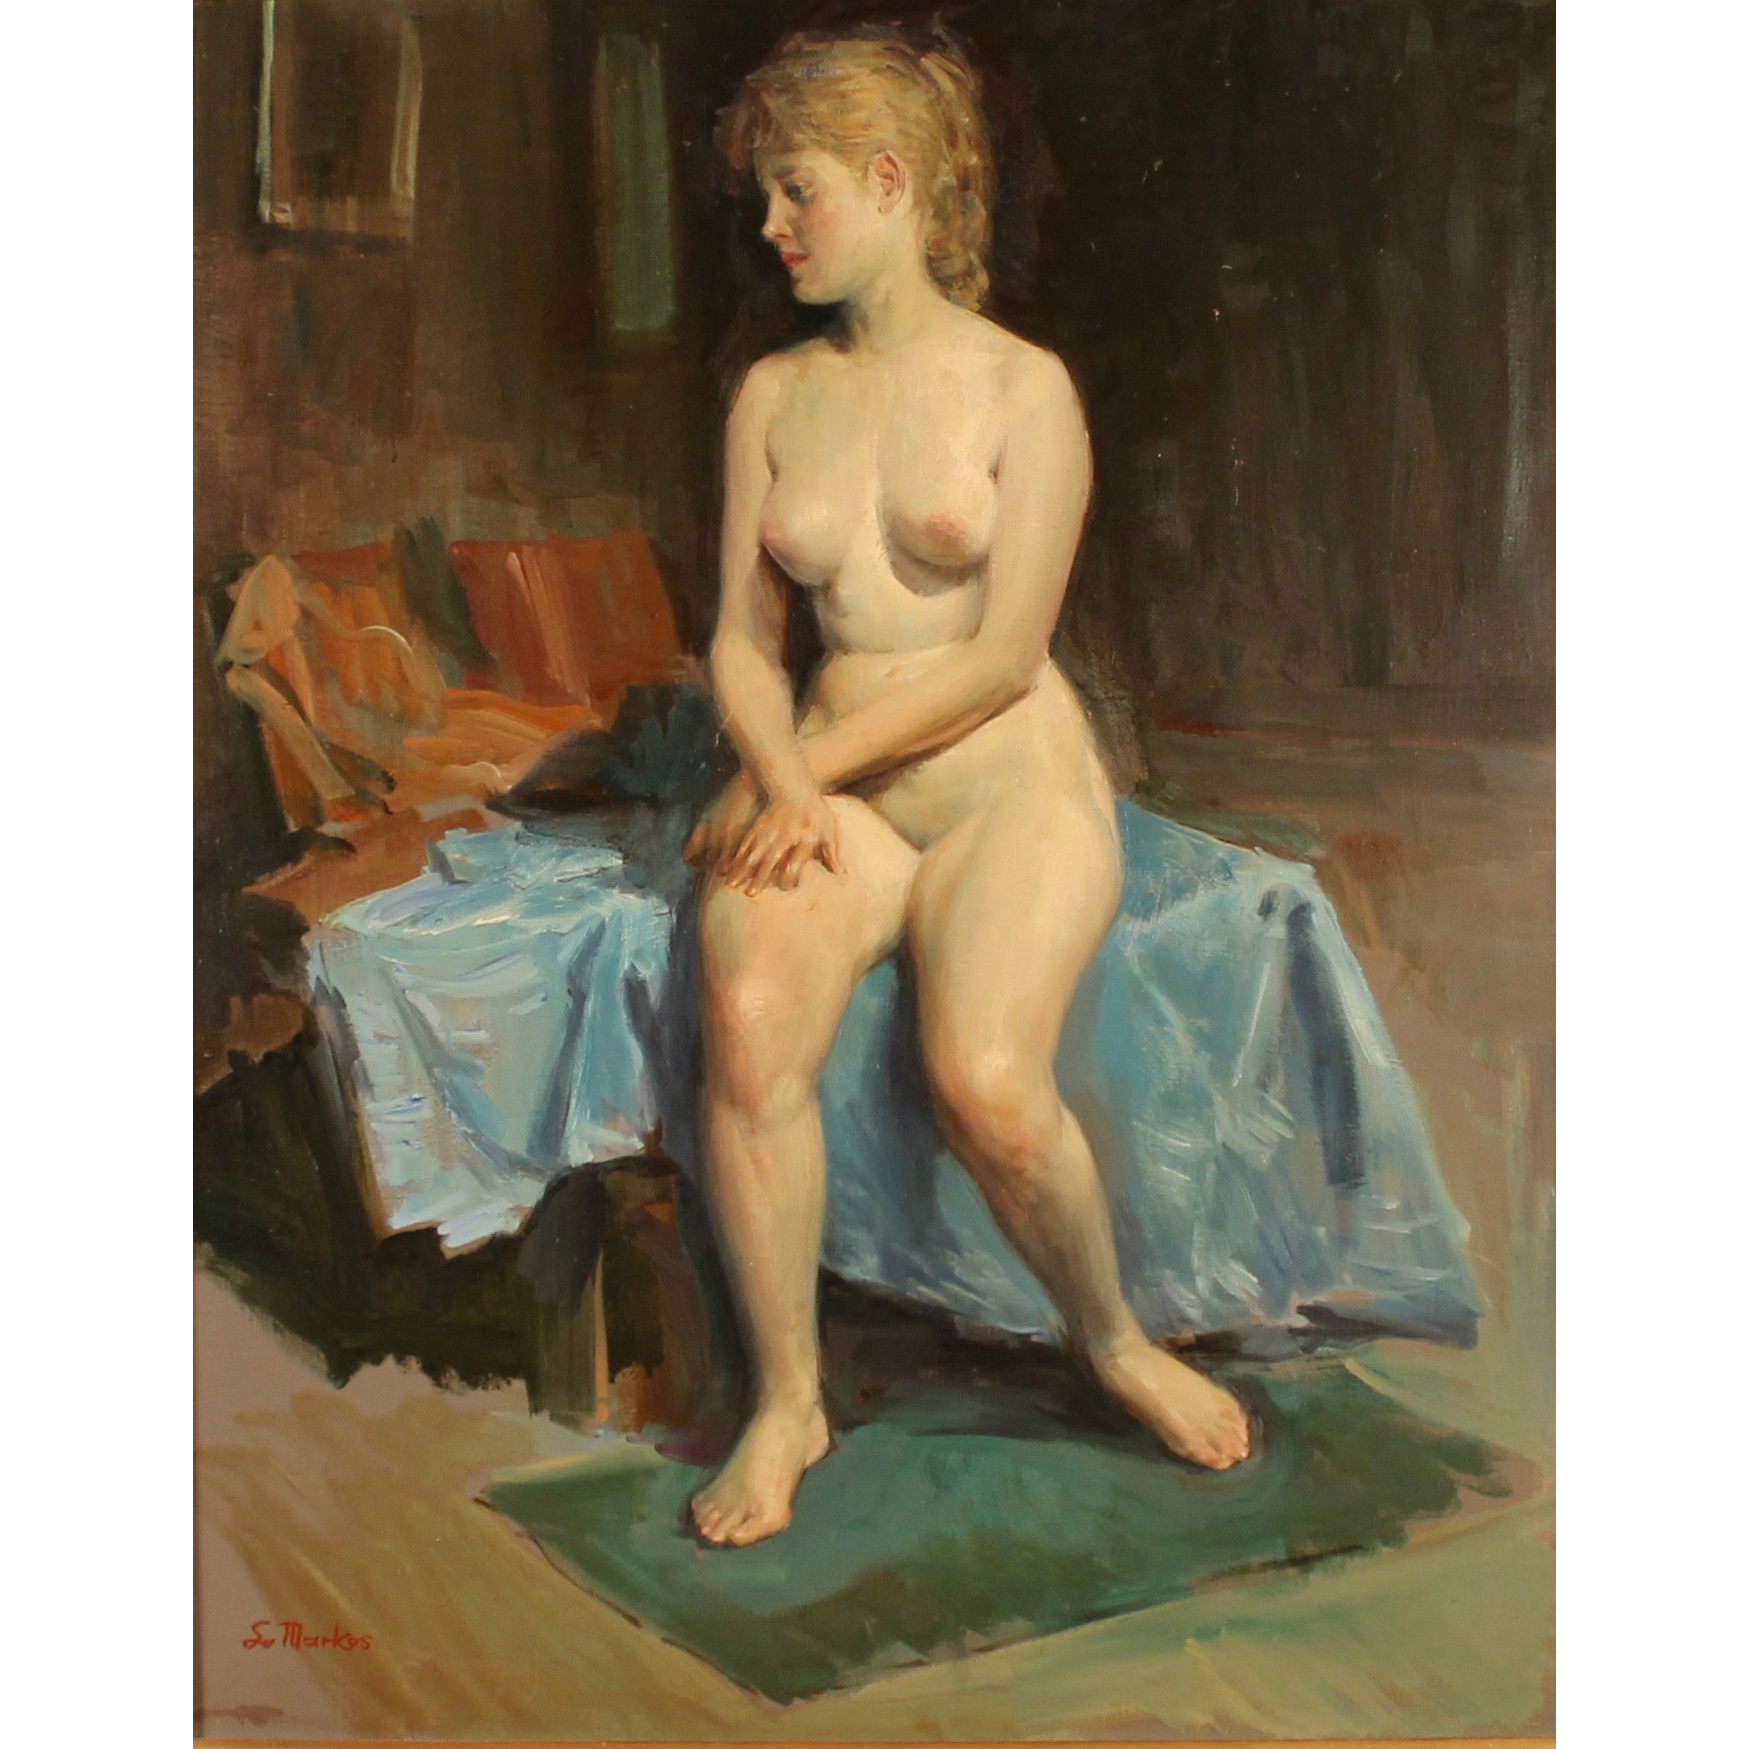 MARKOS LAYOS (1917-1993) "Nudo di donna" - "Naked woman"